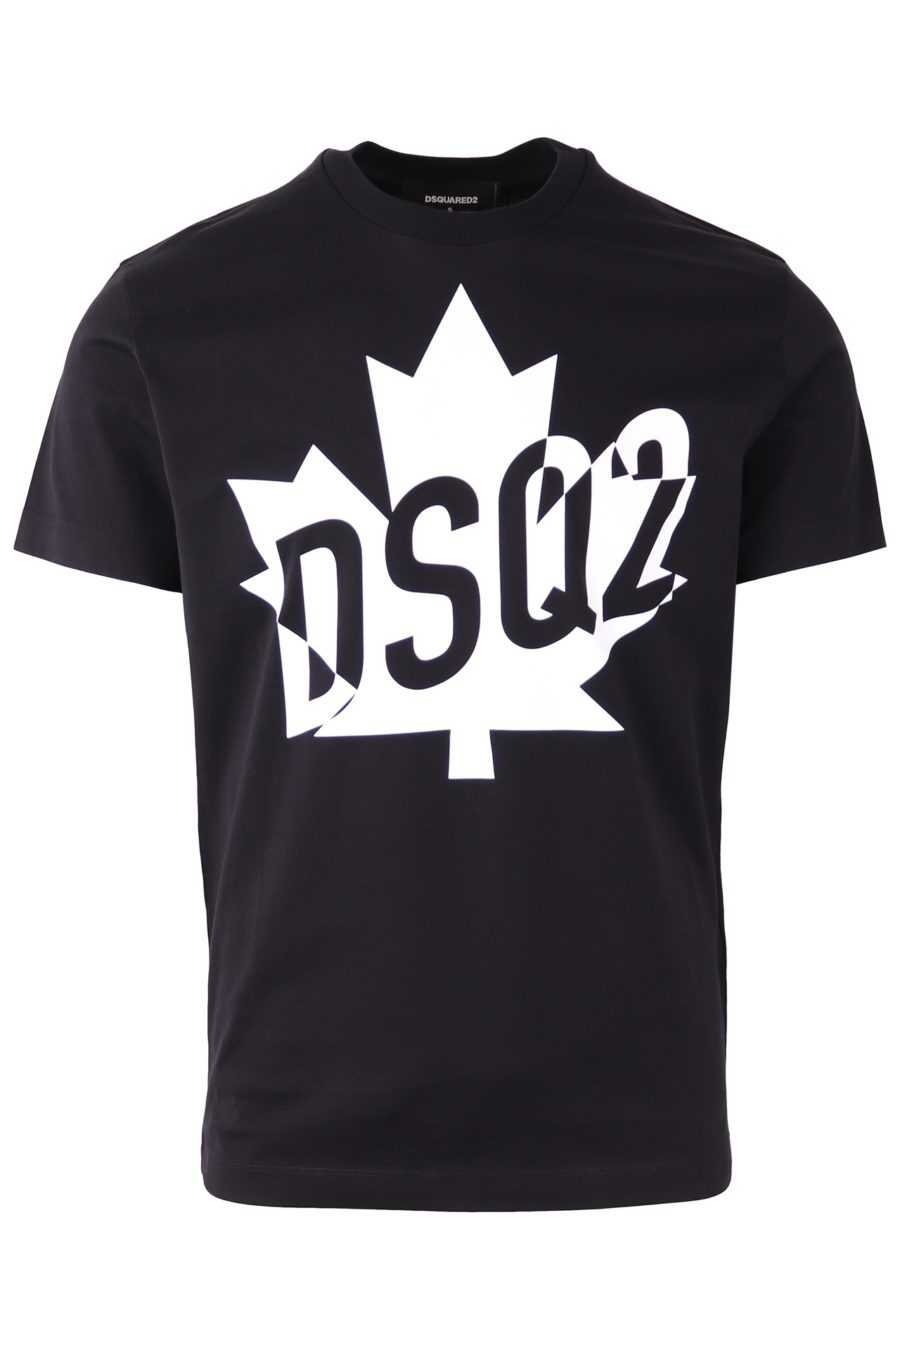 T-shirt Dsquared2 black logo white DSQ2 - e459f248587e56b84a7b0c017f66fa5bc13df2d7